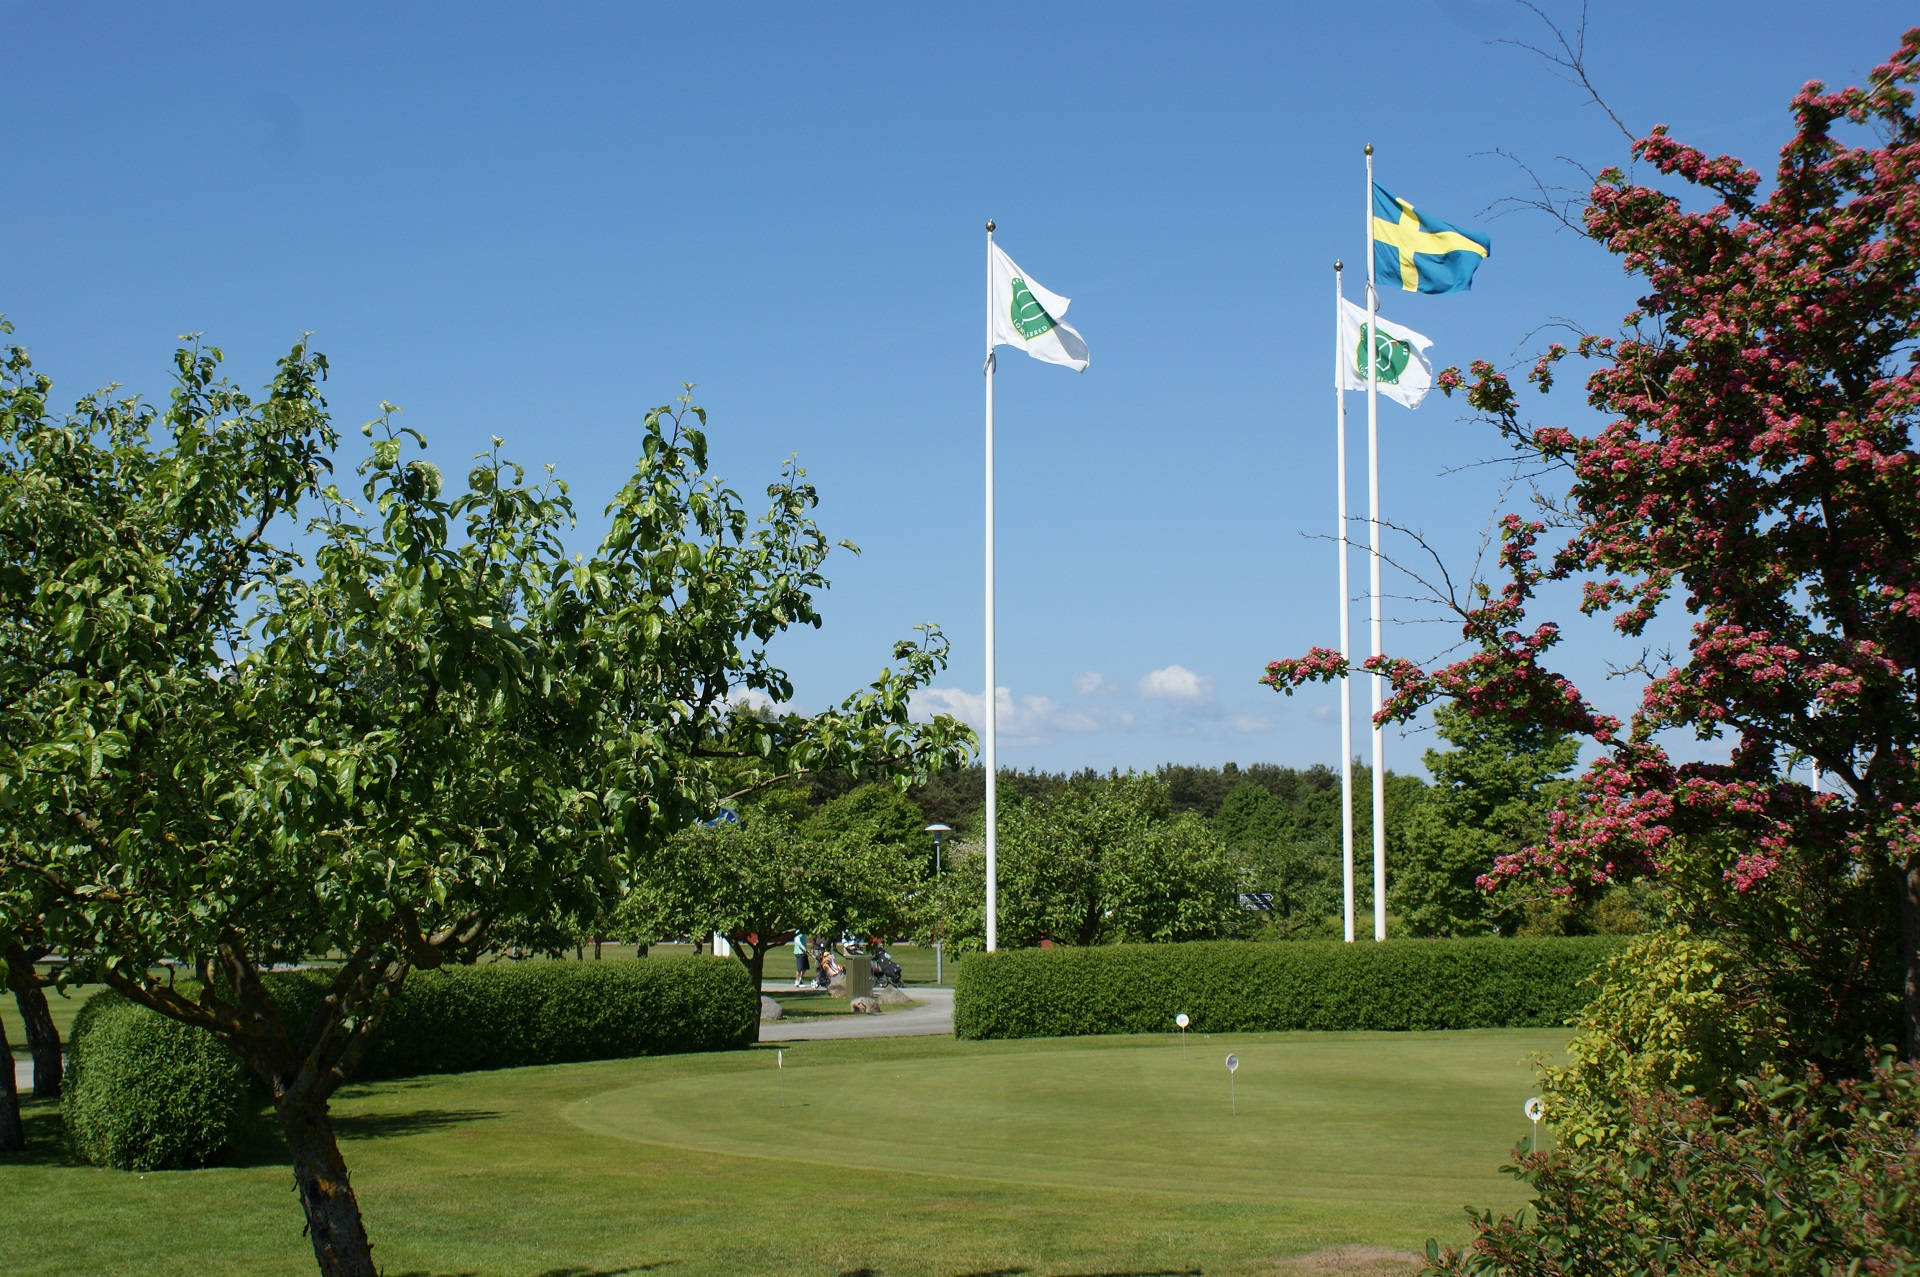 Örestads Golfklubb | Golfbane NordicGolfers.com